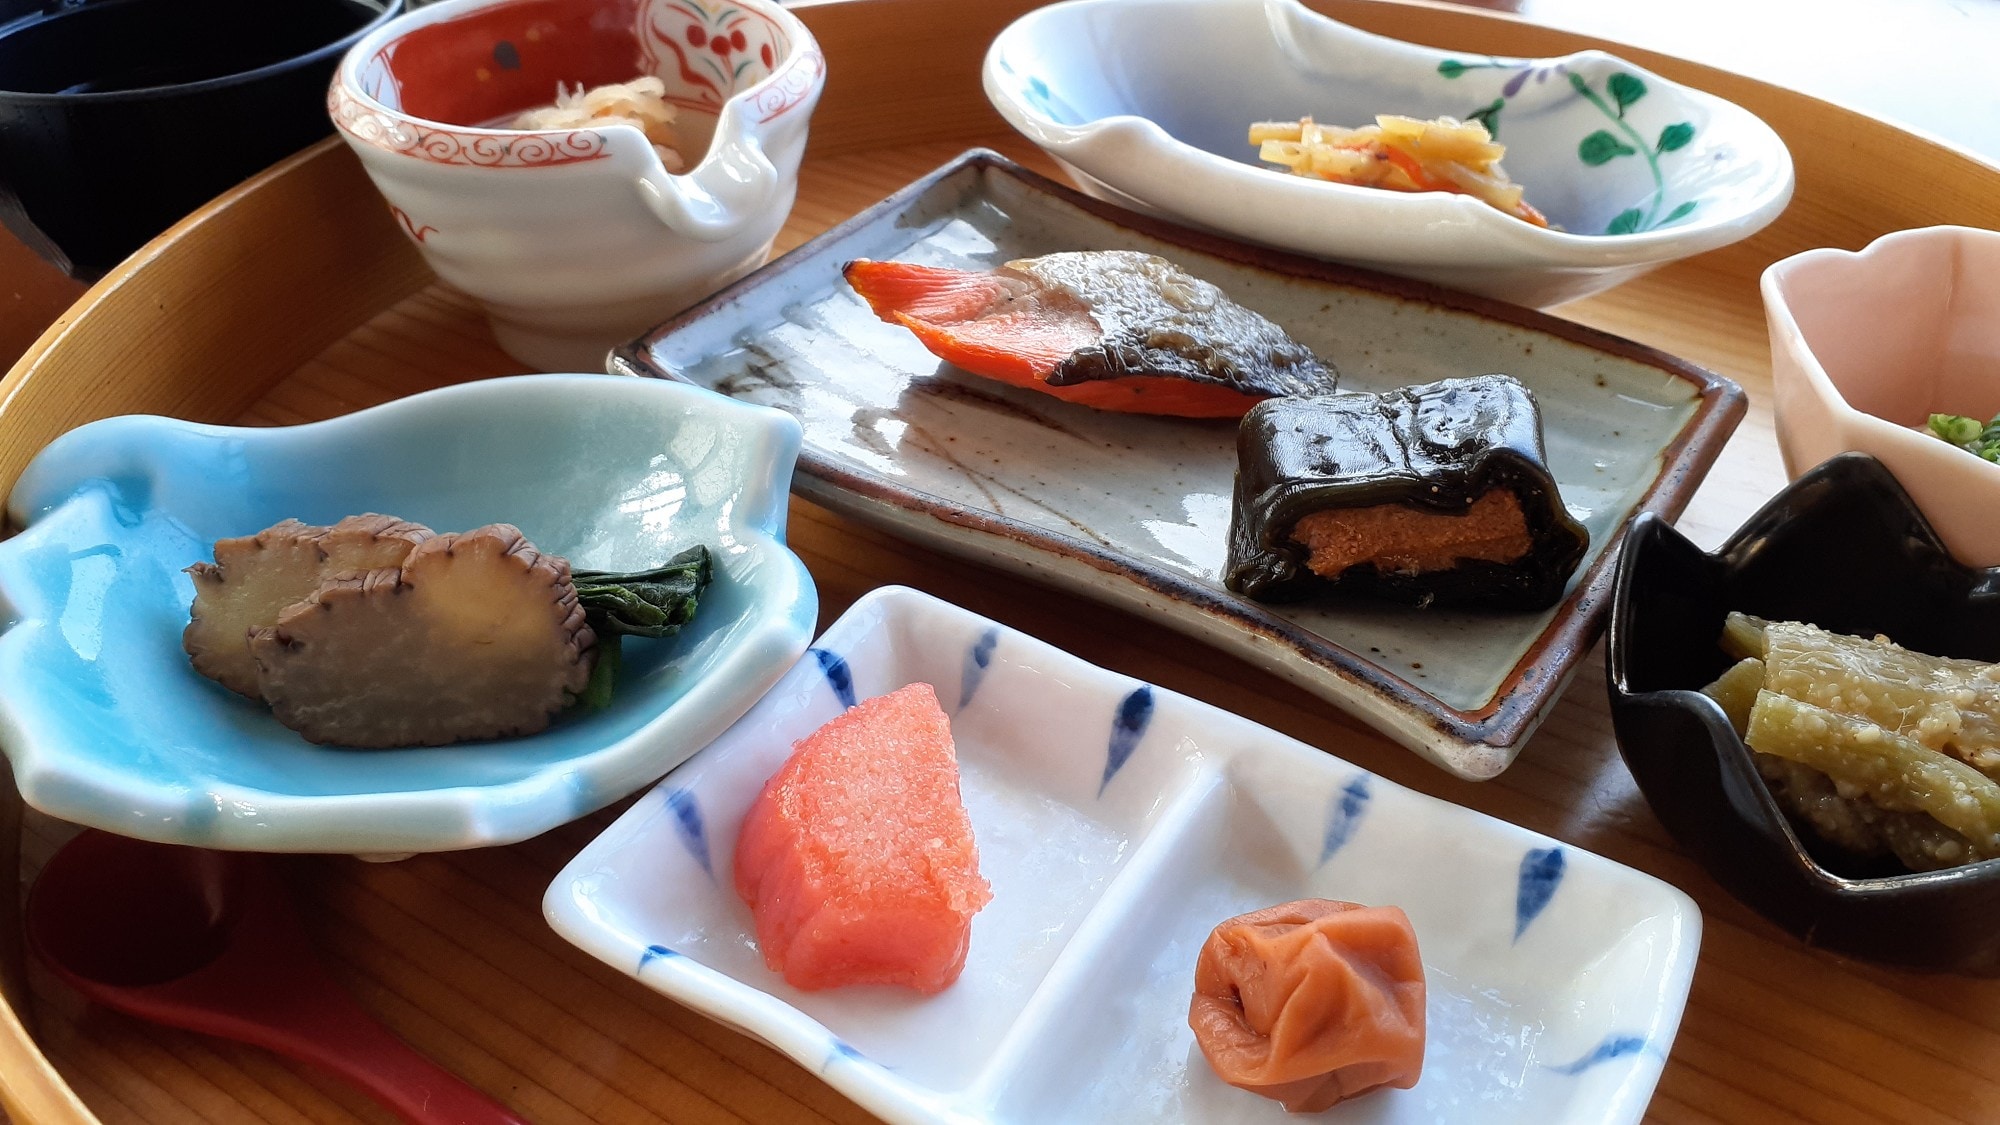 ■An example of breakfast｜Zaisho pickles, sockeye salmon, herring kelp rolls, cod roe, pickled plums, etc.